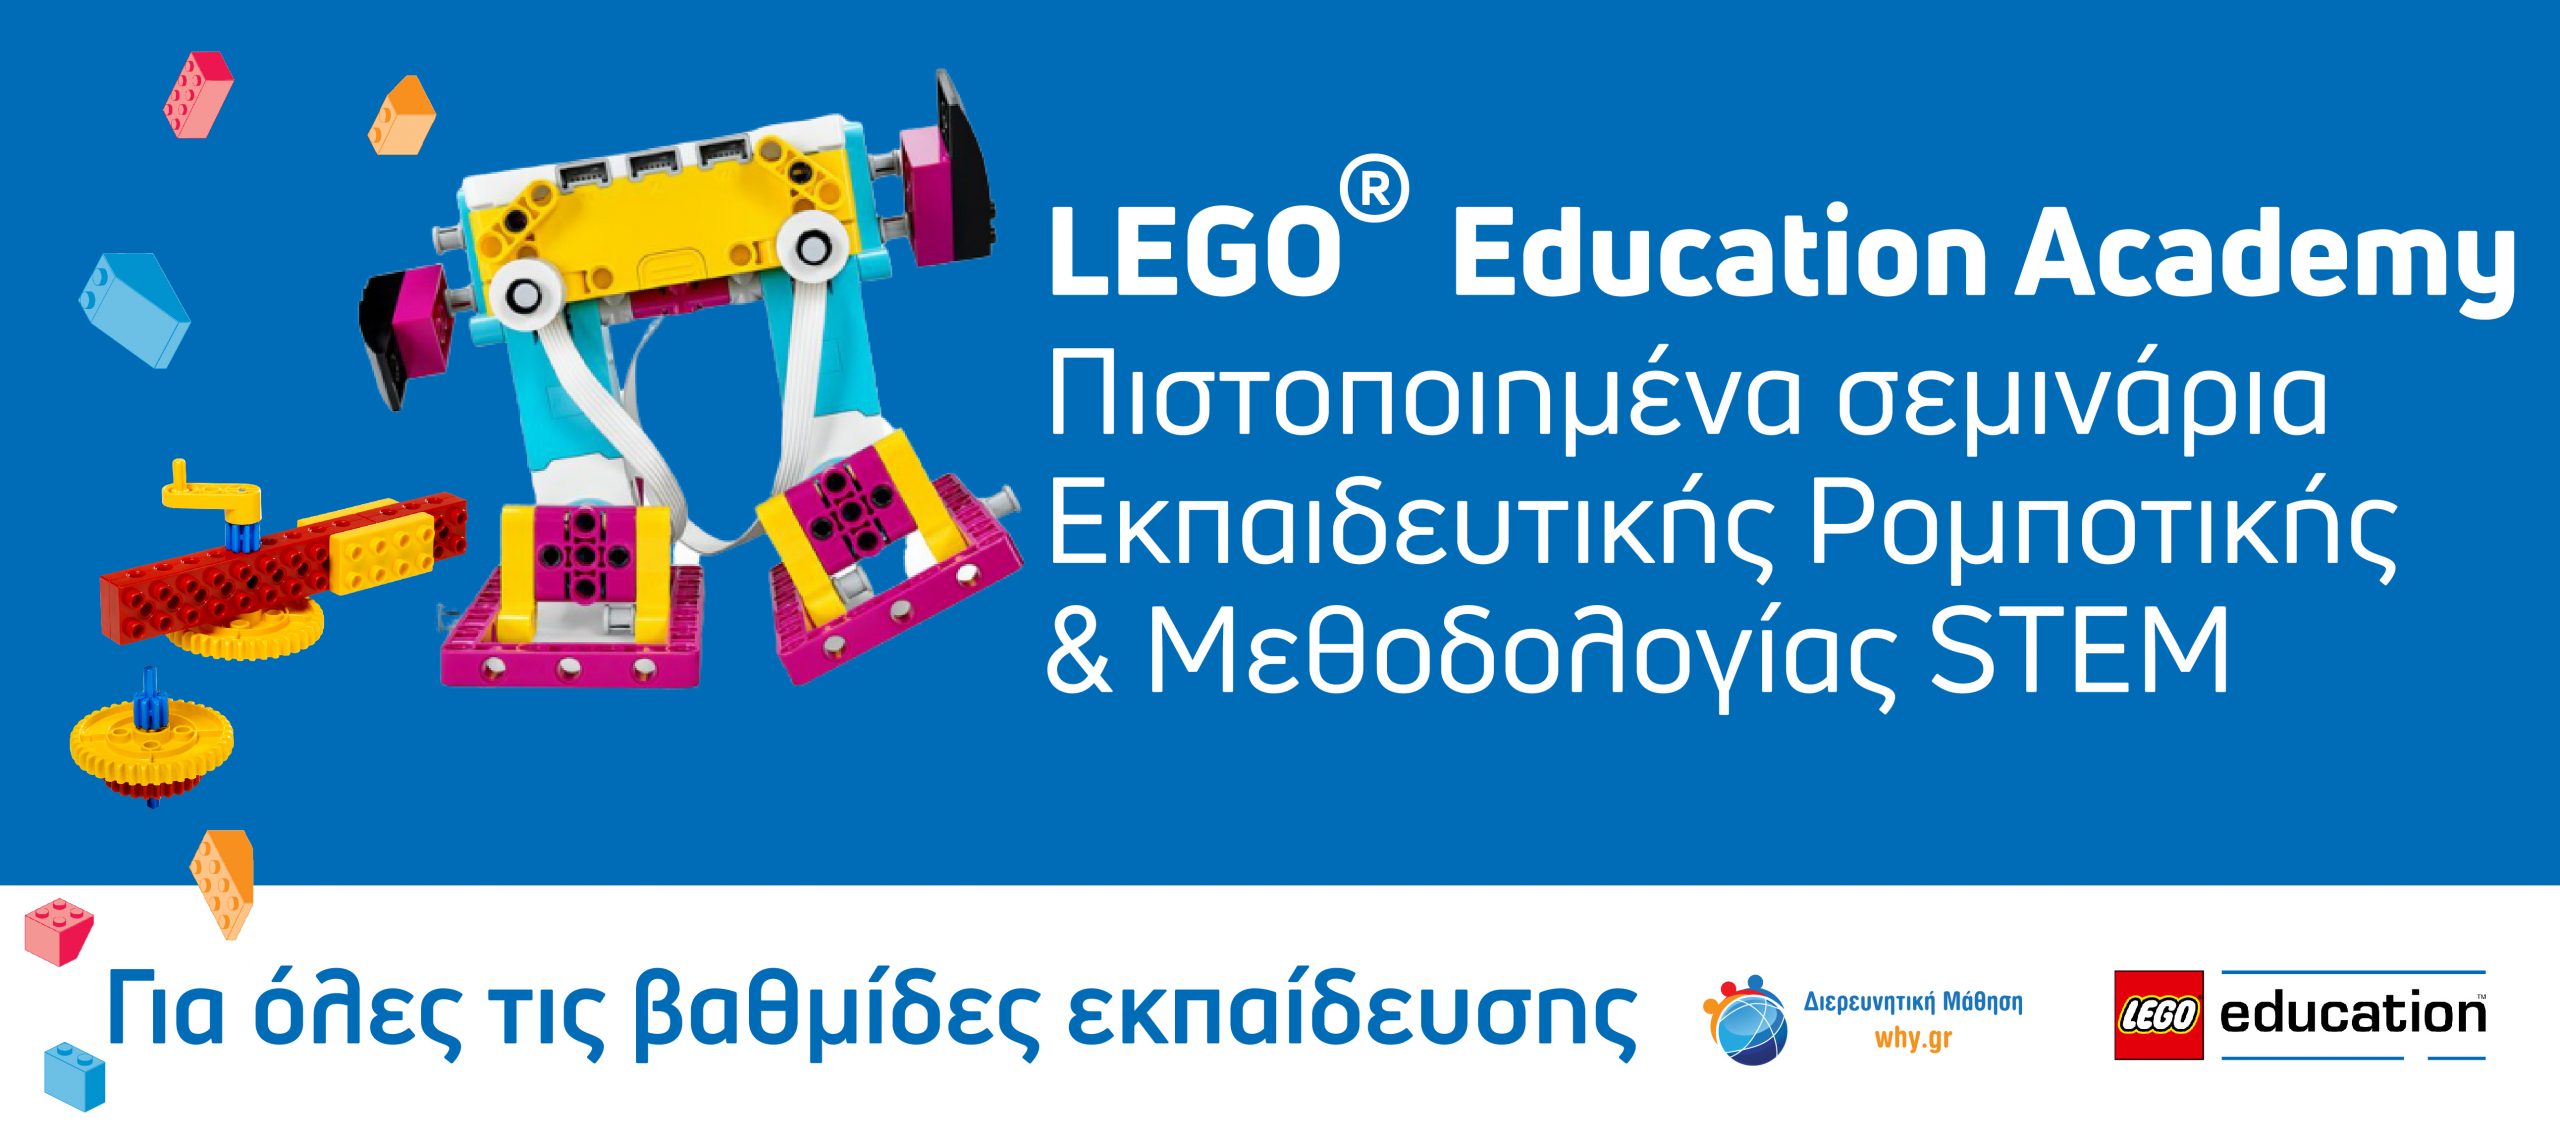 Lego Education Academy